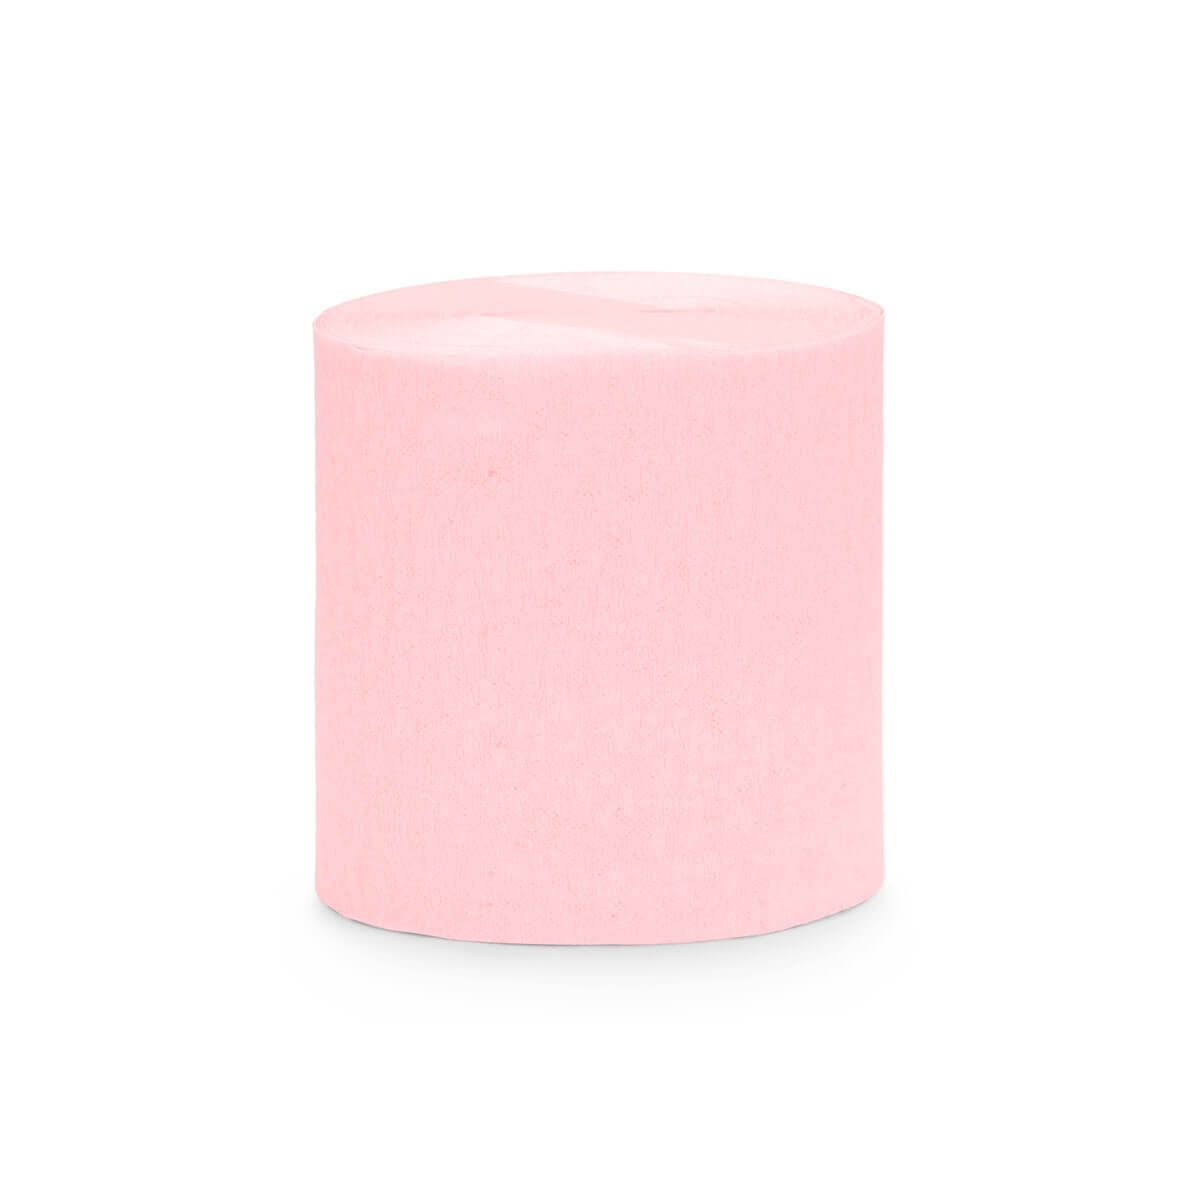 Kreppbänder rosa pastell, 4 Rollen à 5cm x 10m